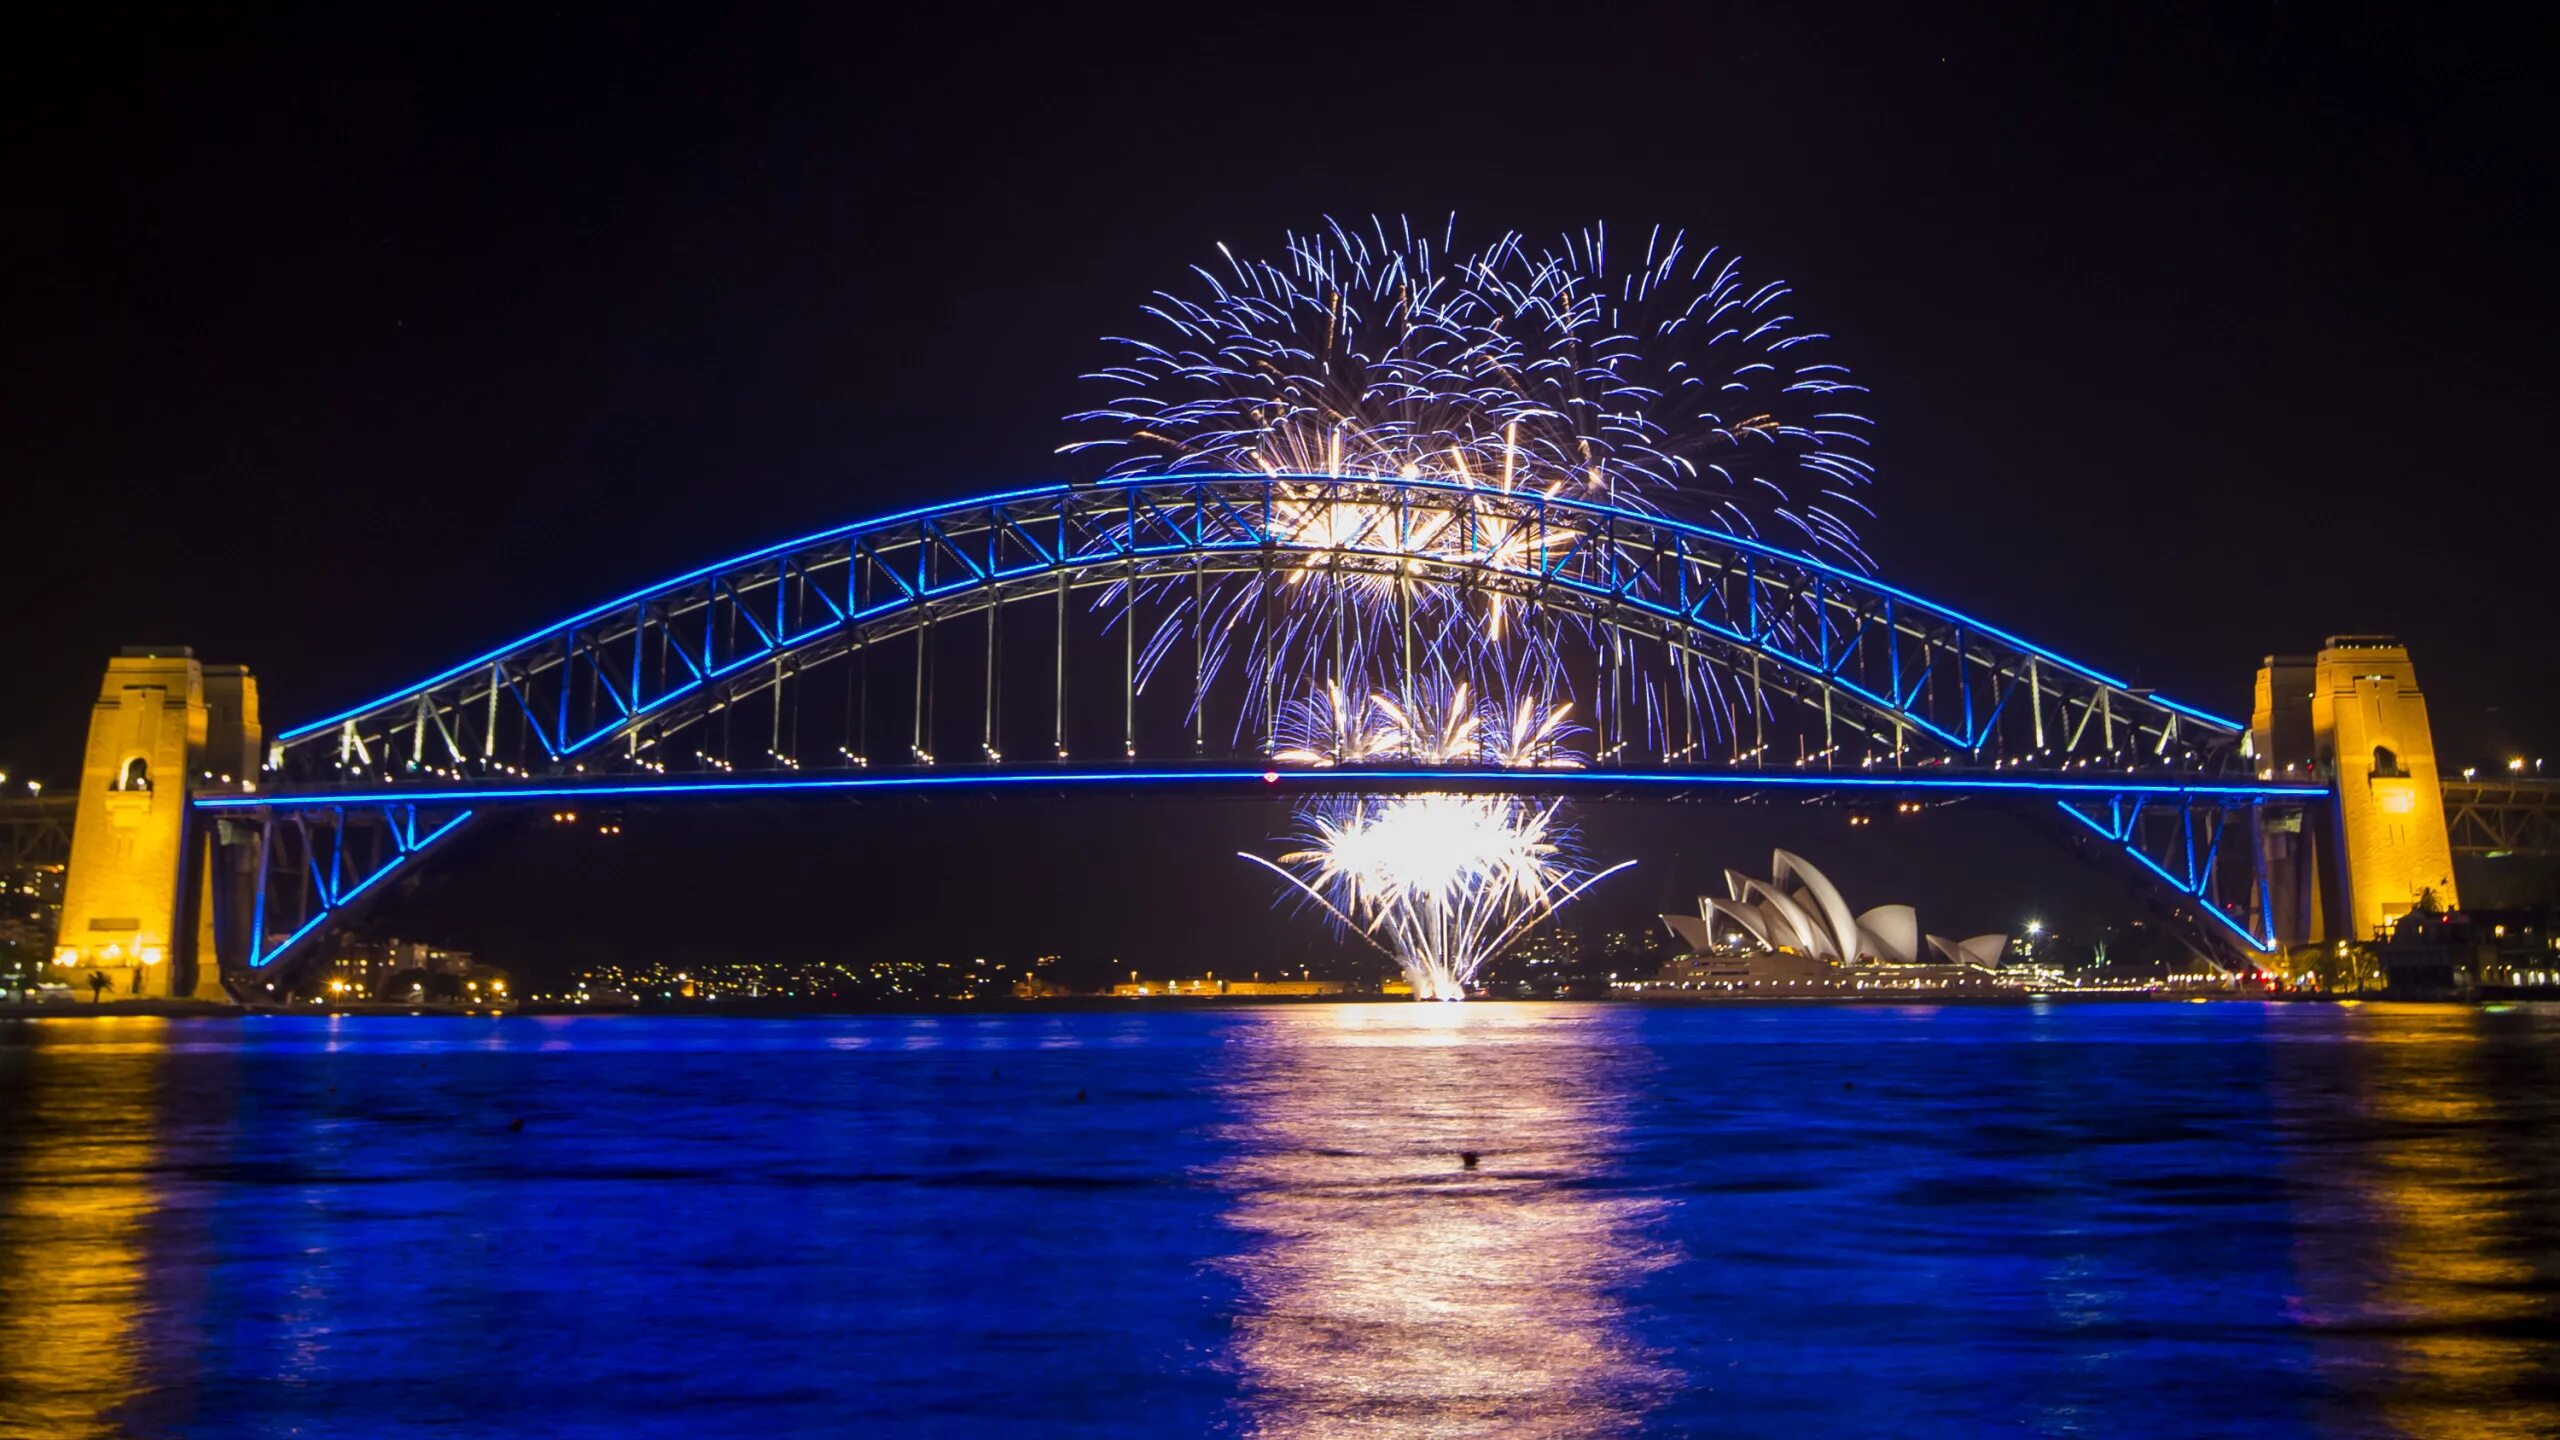 Harbour bridge. Харбор-бридж Сидней. Мост Харбор бридж. Мост Харбор бридж в Австралии. Мост Сиднейской Гавани.